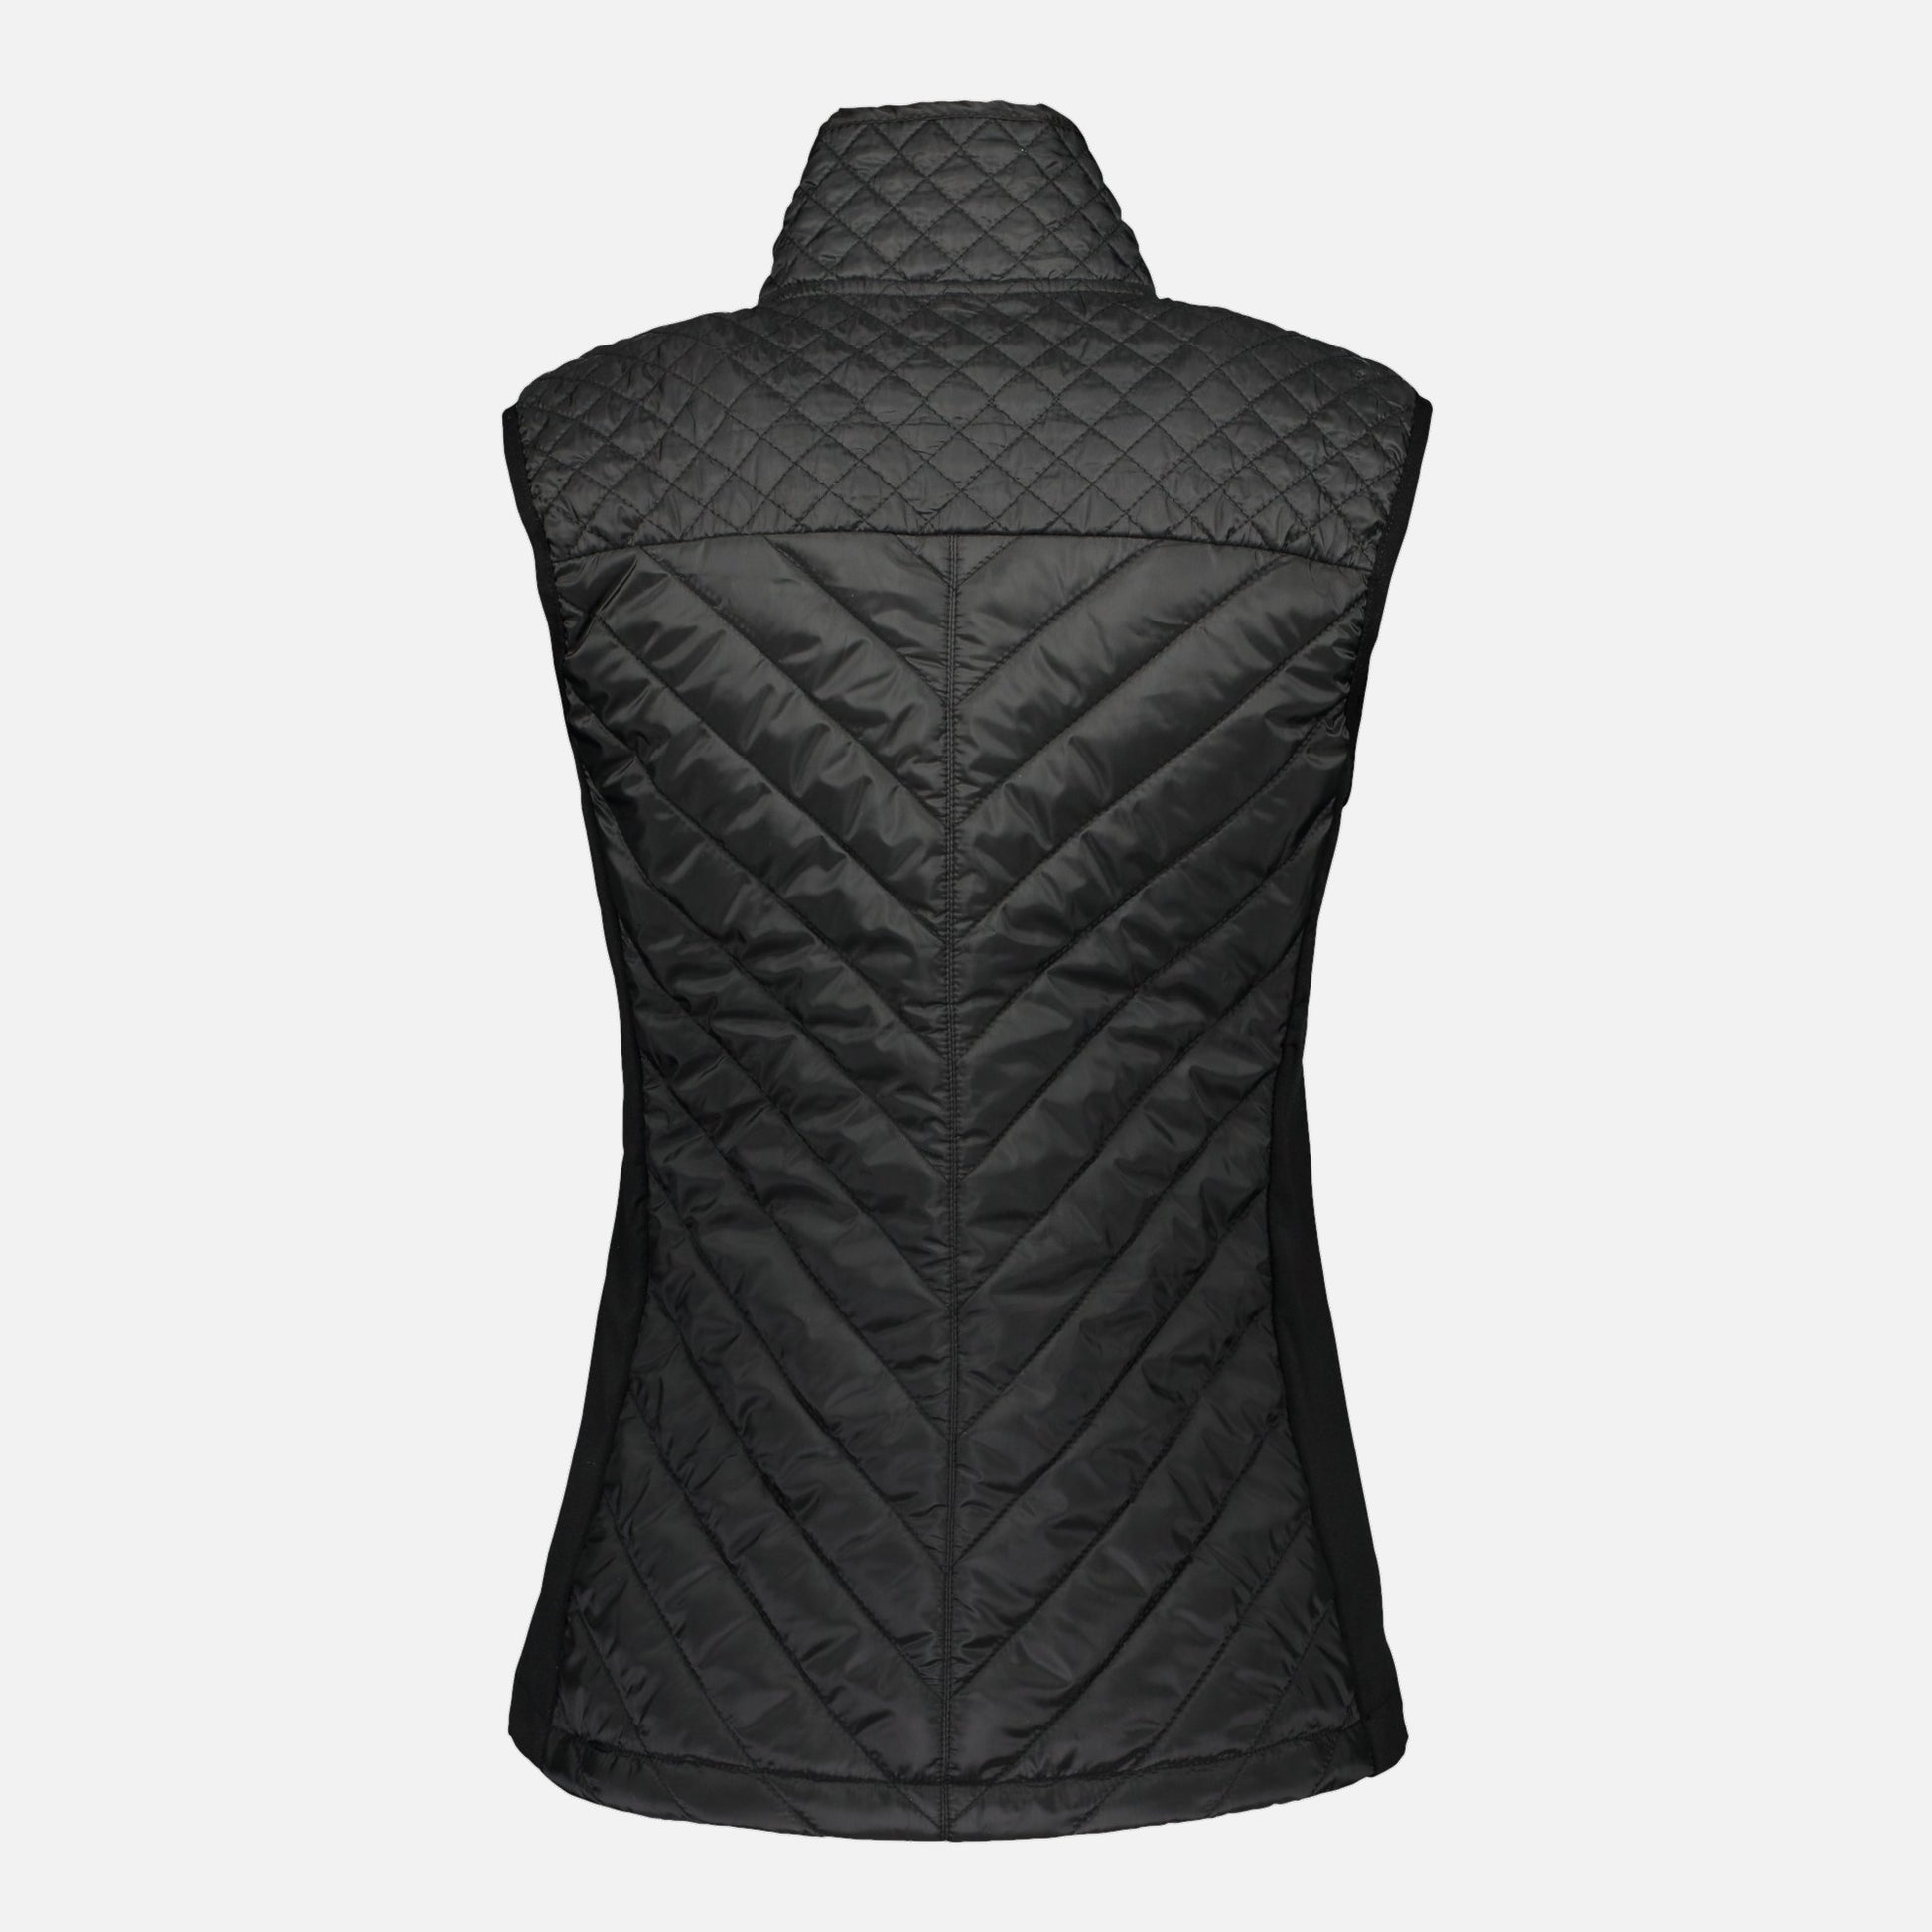 891028 Catmandoo Ladies Quilted Vest Black Product Image Rear